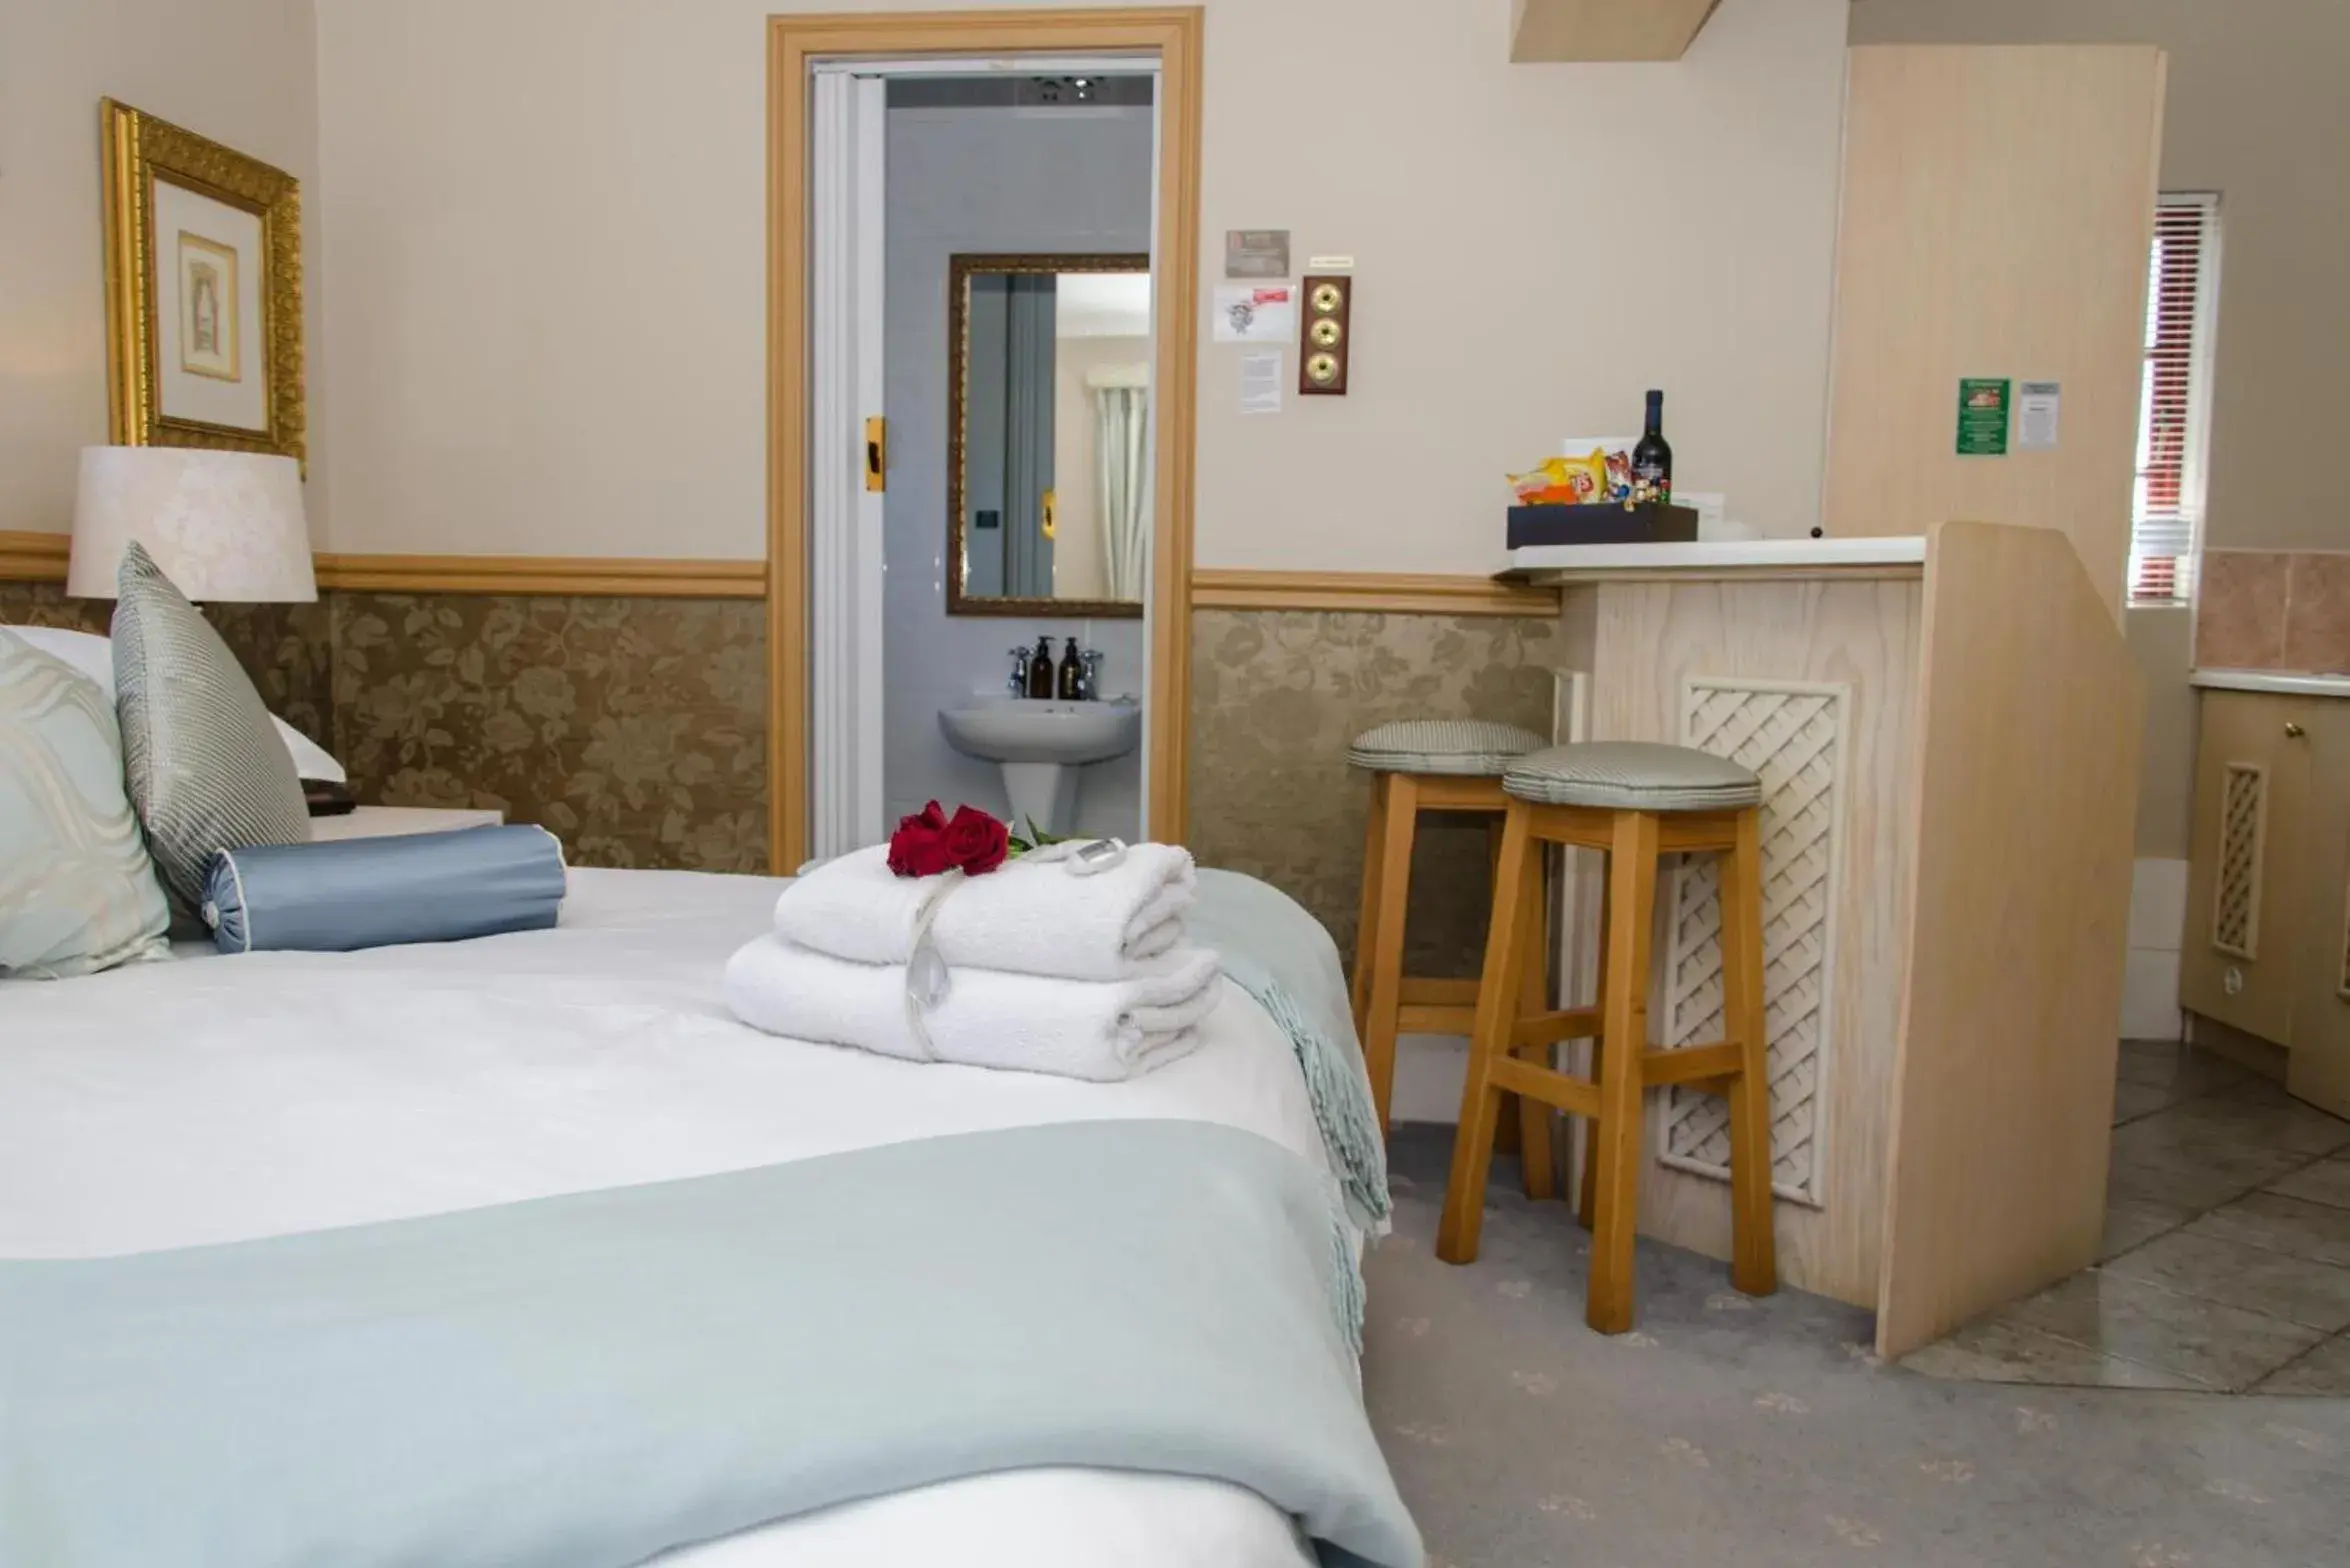 Bedroom, Room Photo in Brighton Lodge #SOLAR ENERGY #NO LOADSHEDDING